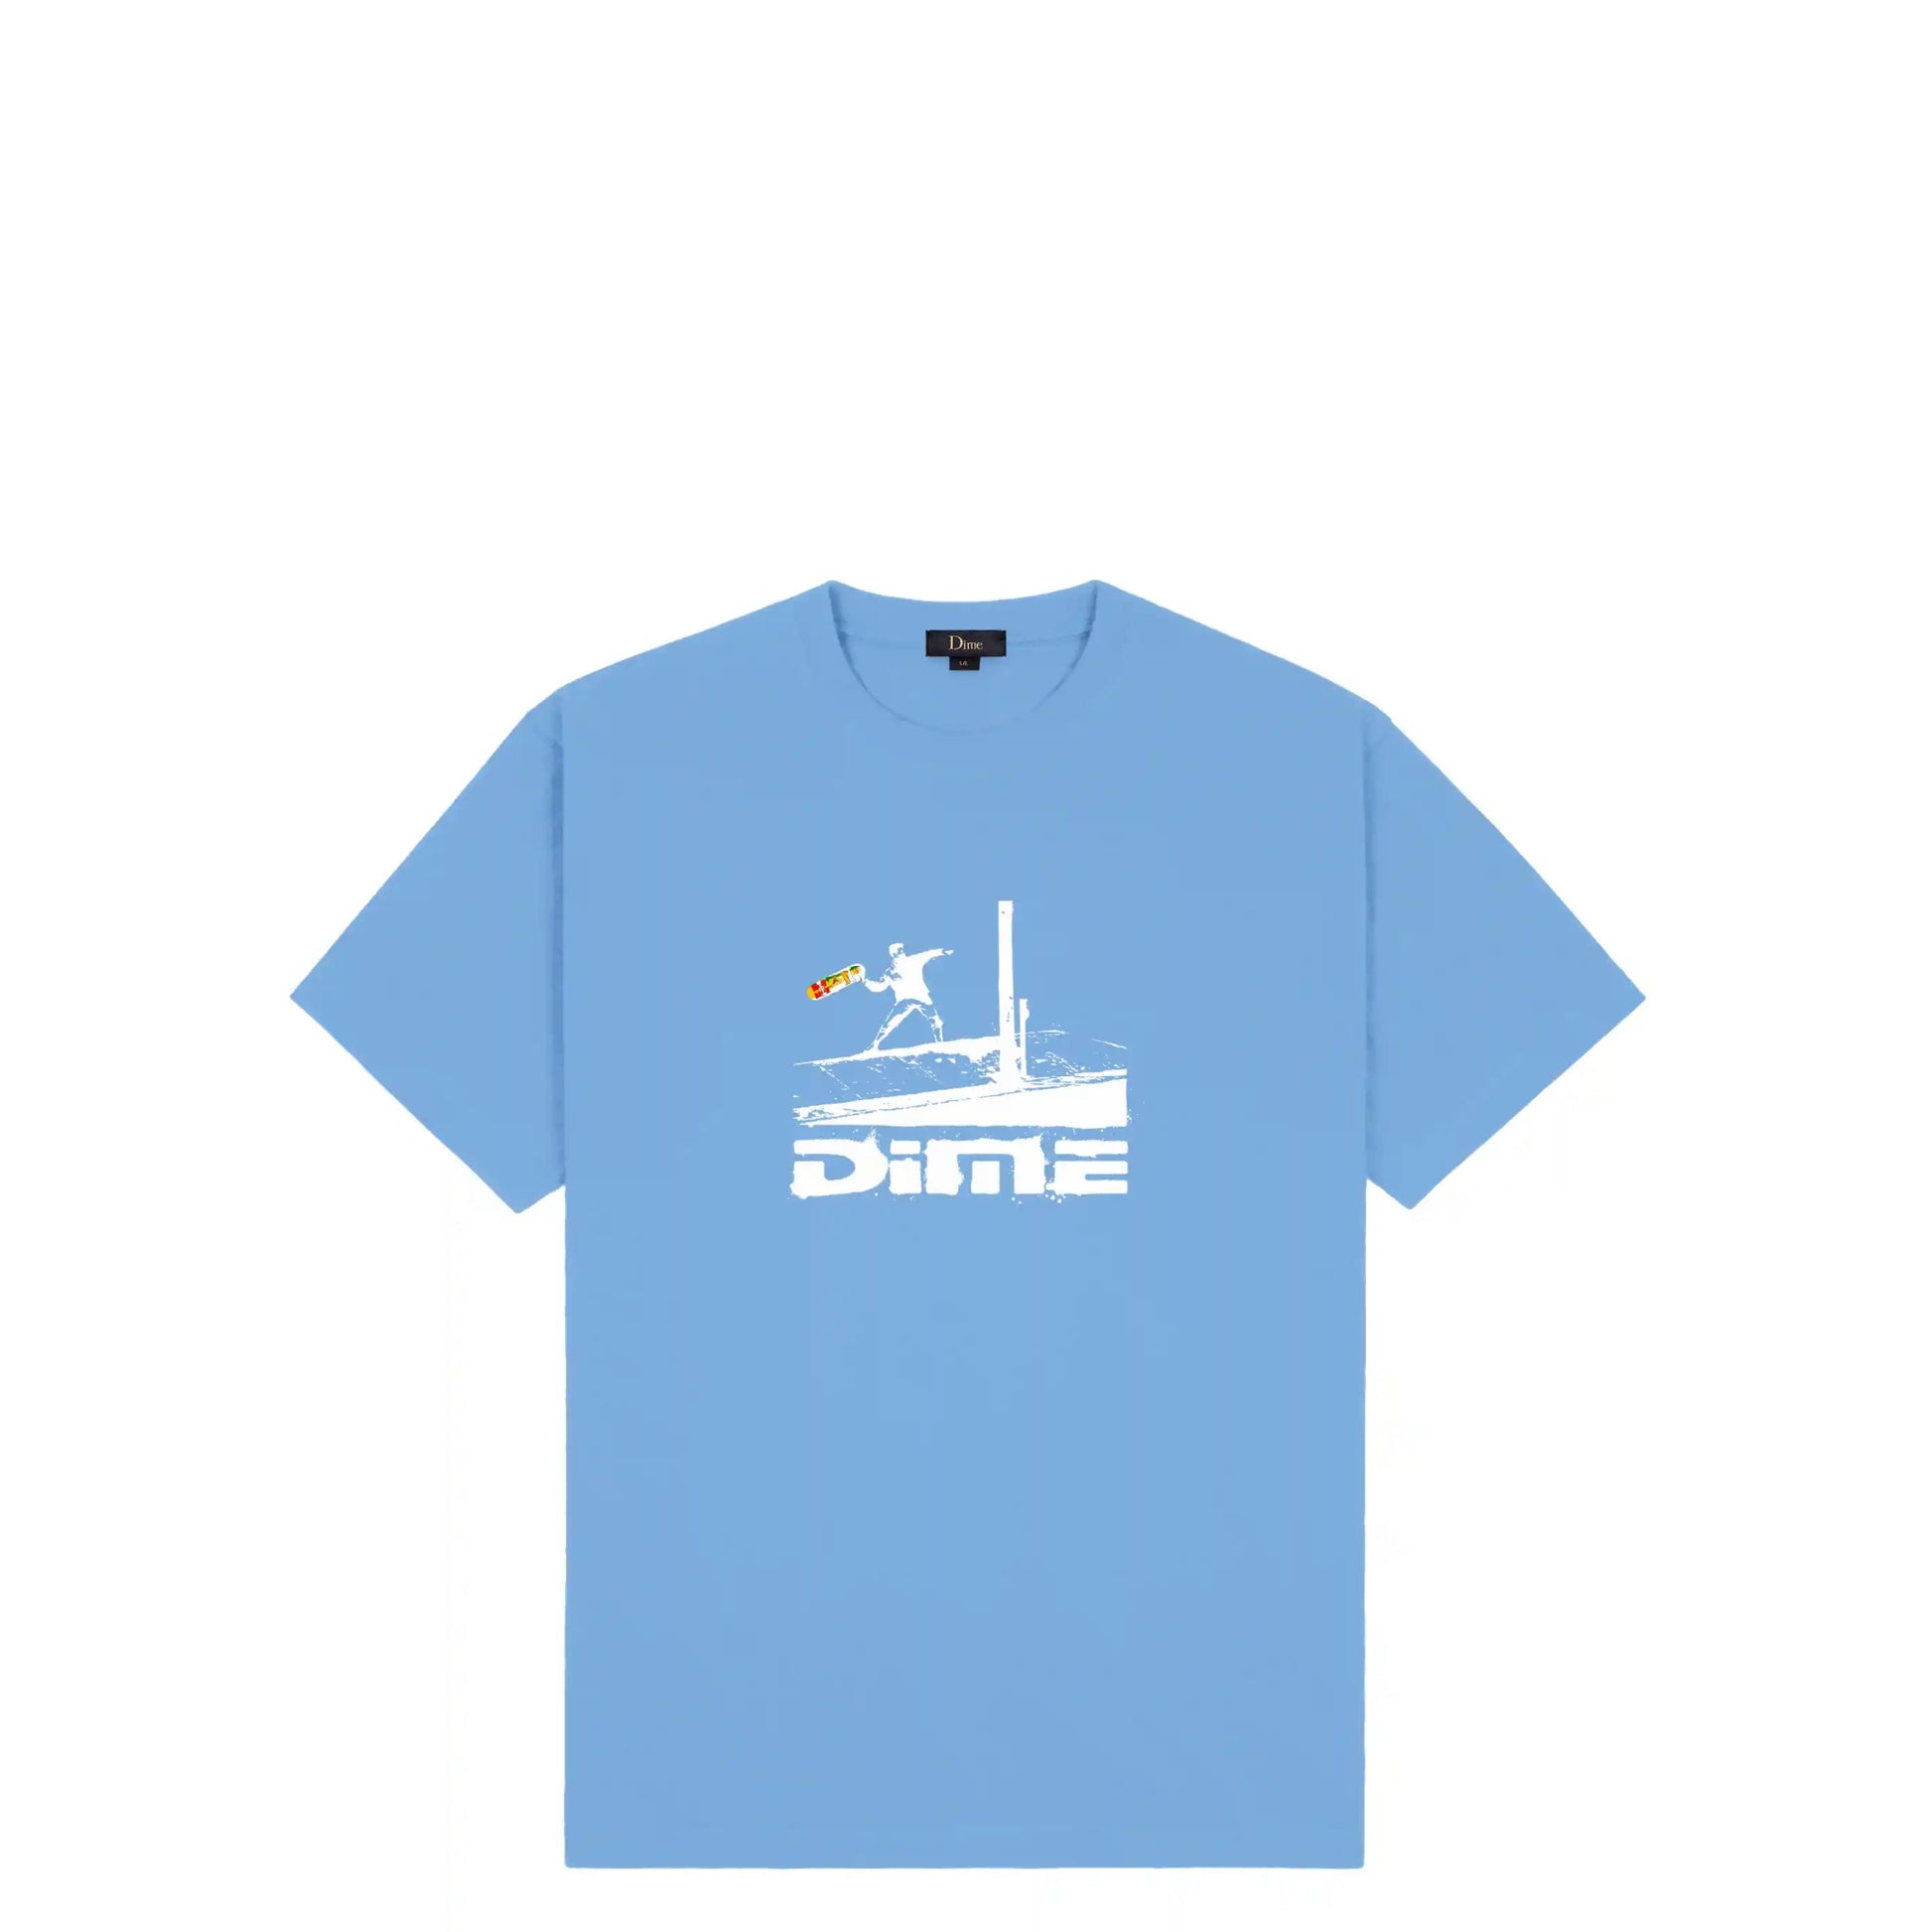 Dime Banky T-Shirt, true blue - Tiki Room Skateboards - 1